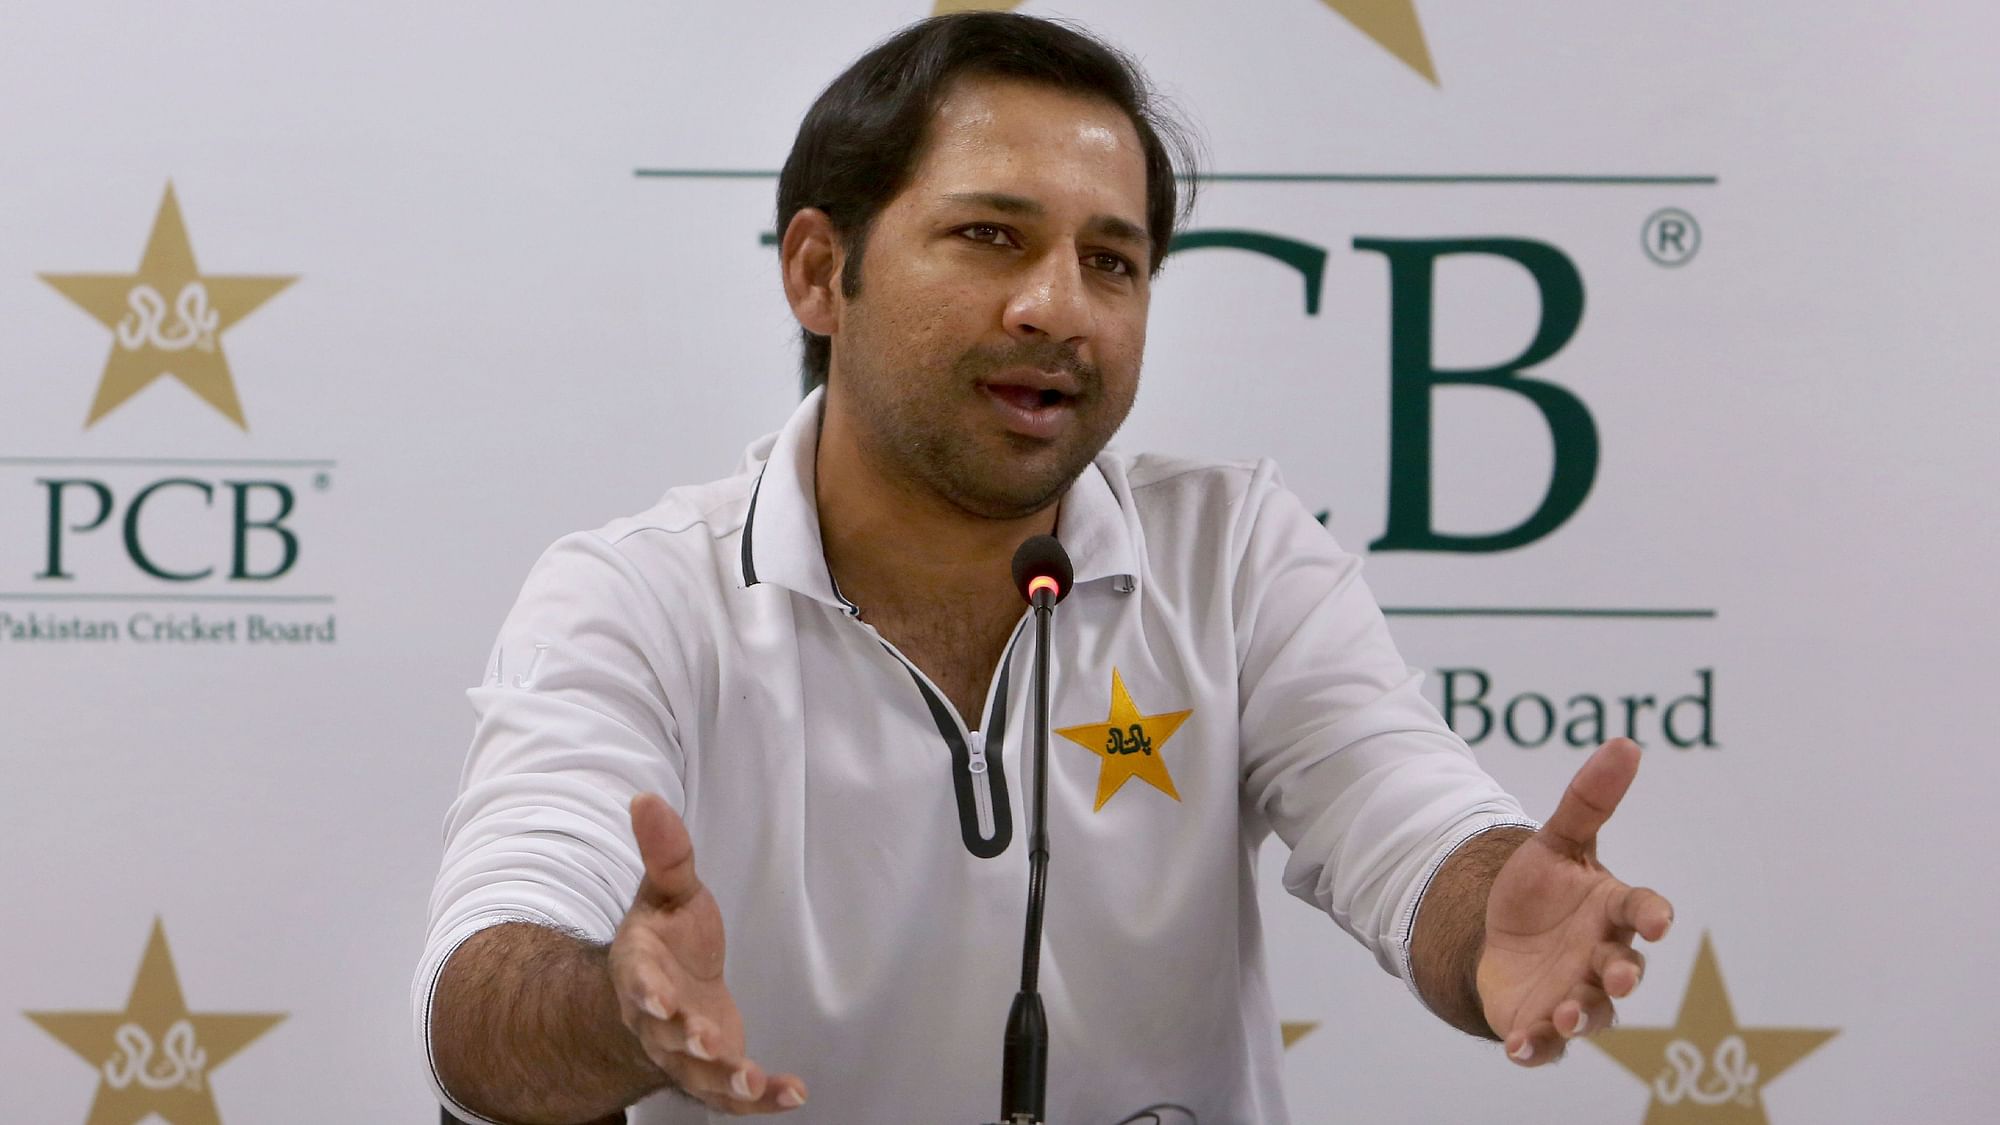 Pakistan cricket team’s skipper Sarfraz Ahmed speaks during a press conference in Karachi, Pakistan, Sunday, July 7, 2019. 